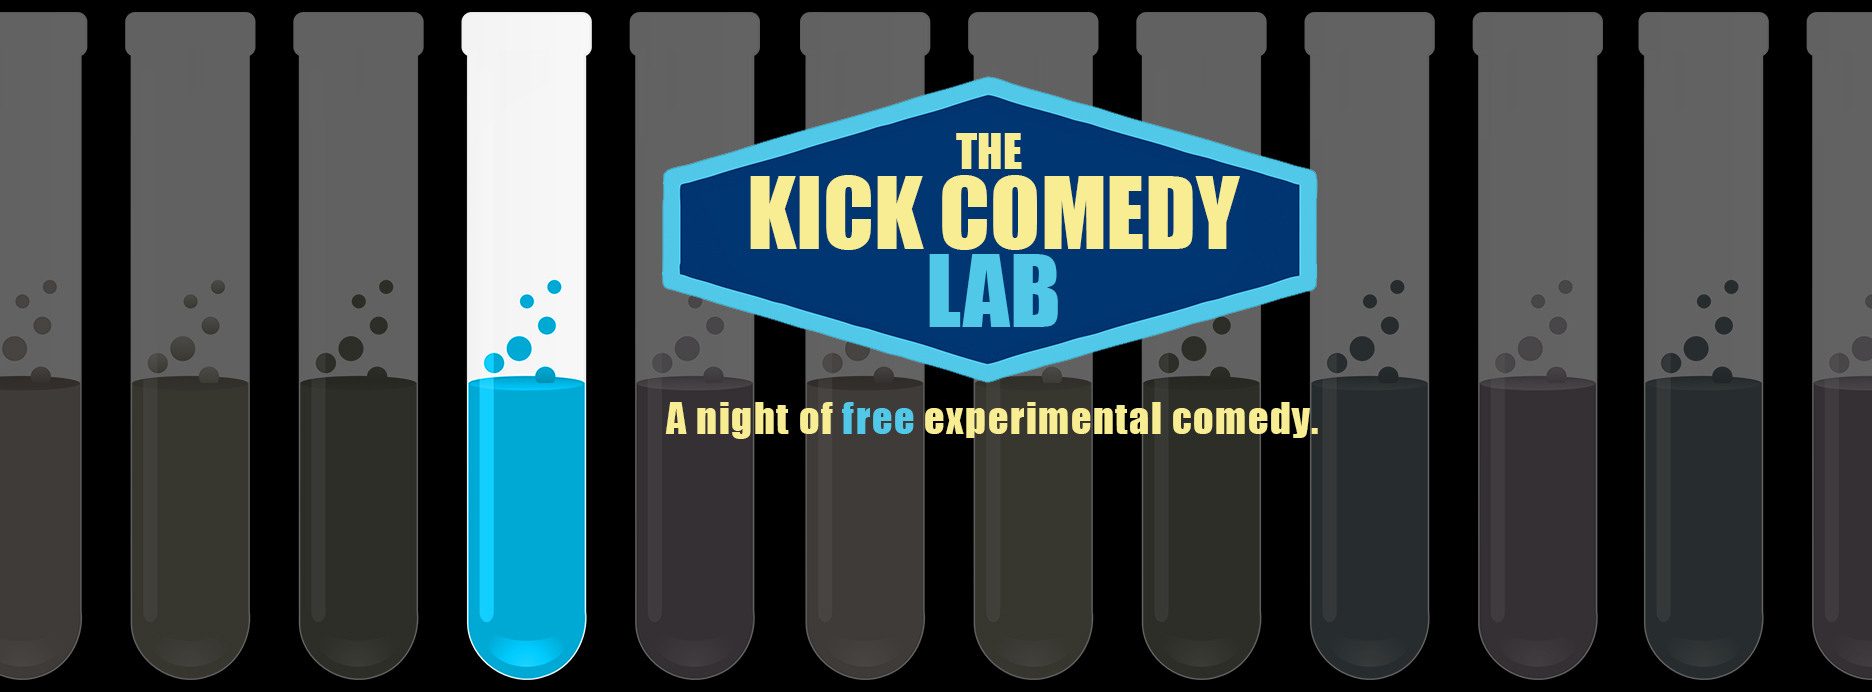 Kick Comedy Lab.jpg